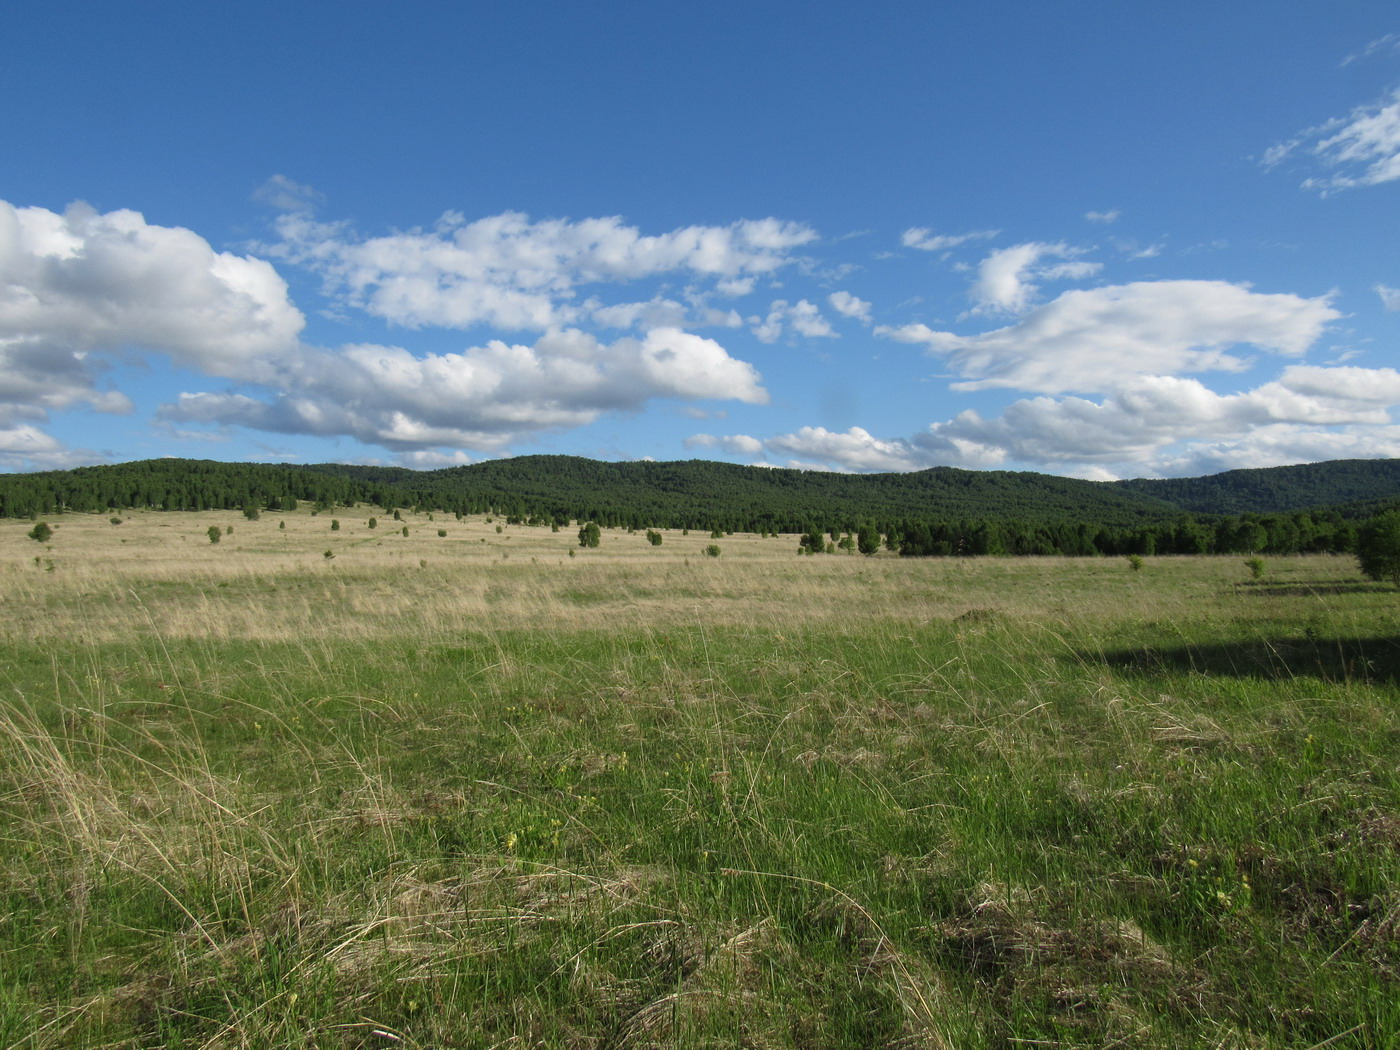 Убейский залив, image of landscape/habitat.